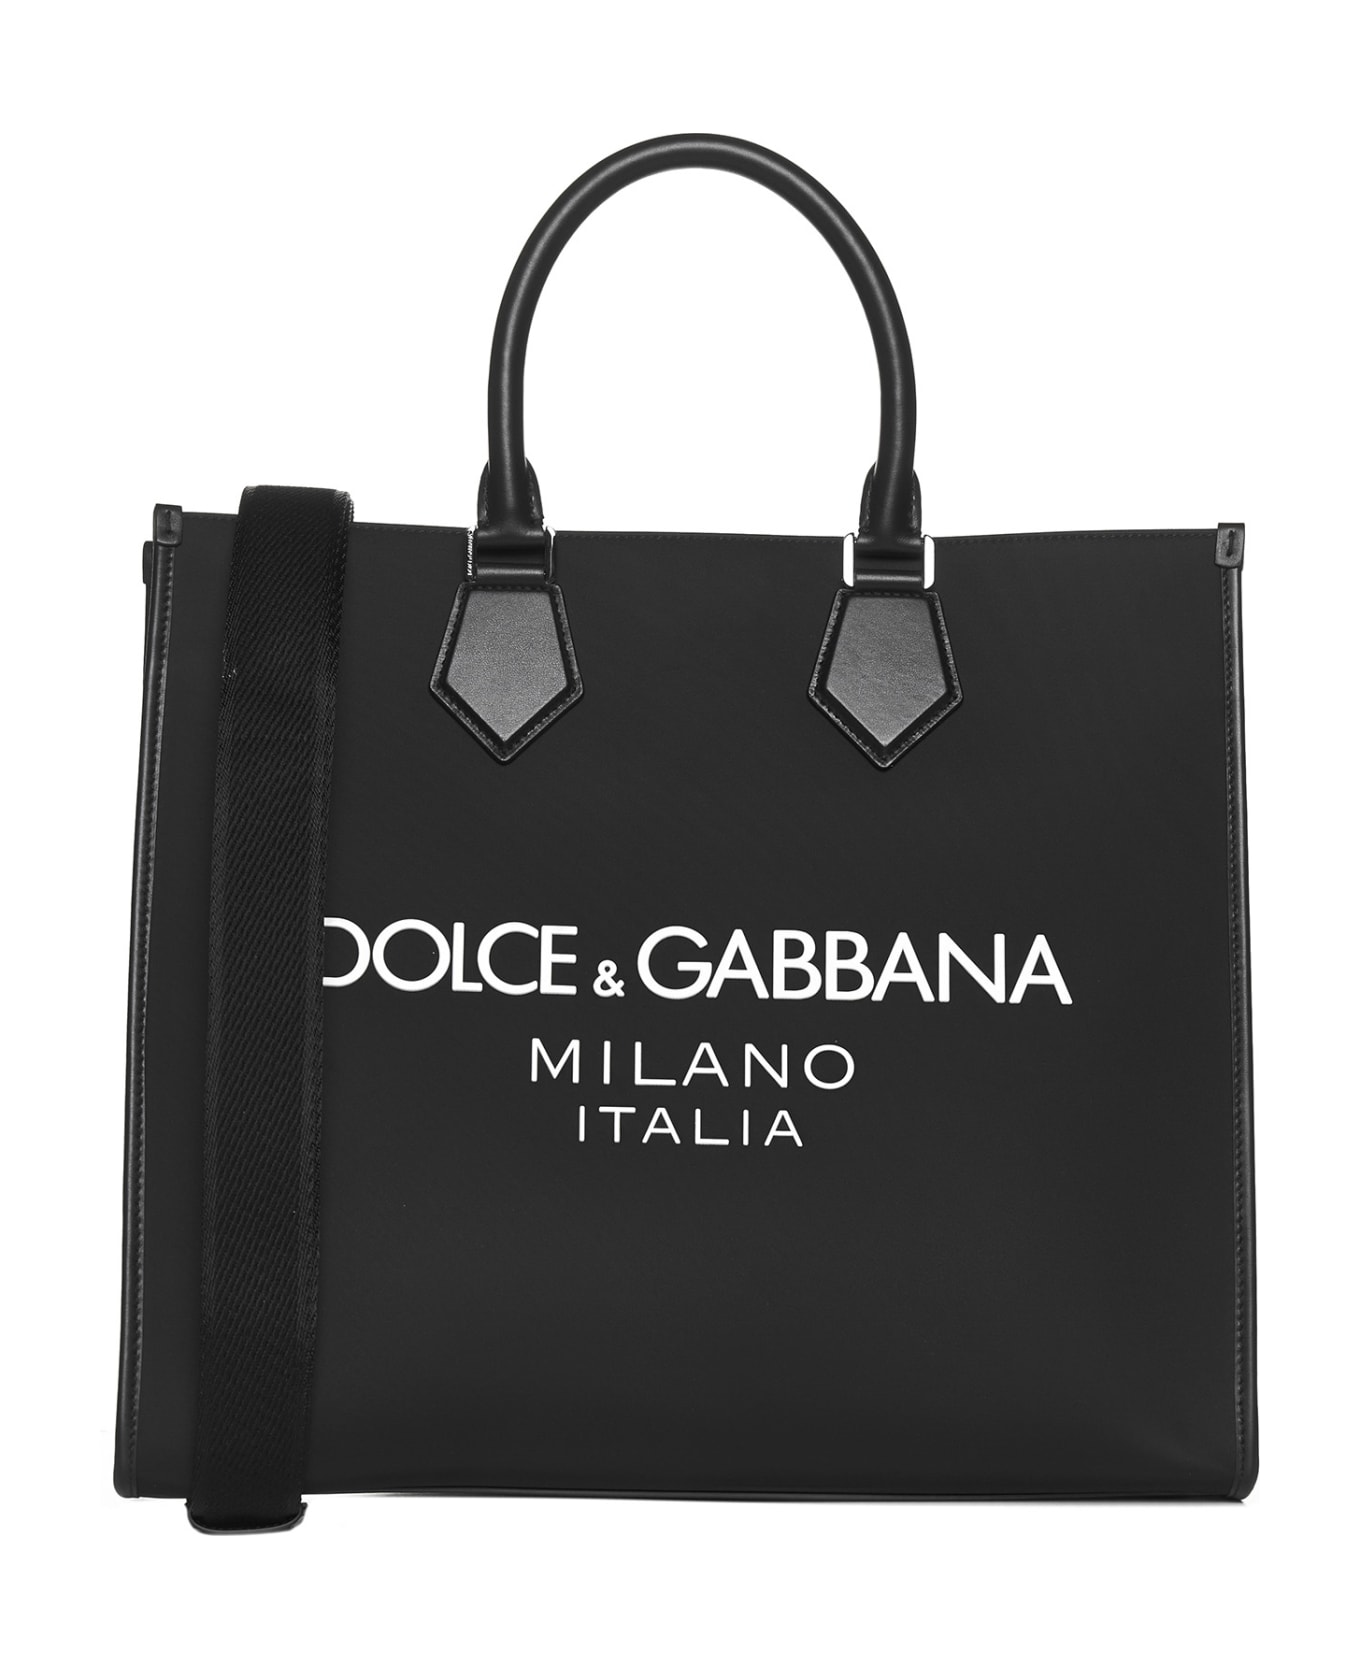 Dolce & Gabbana Tote - Black